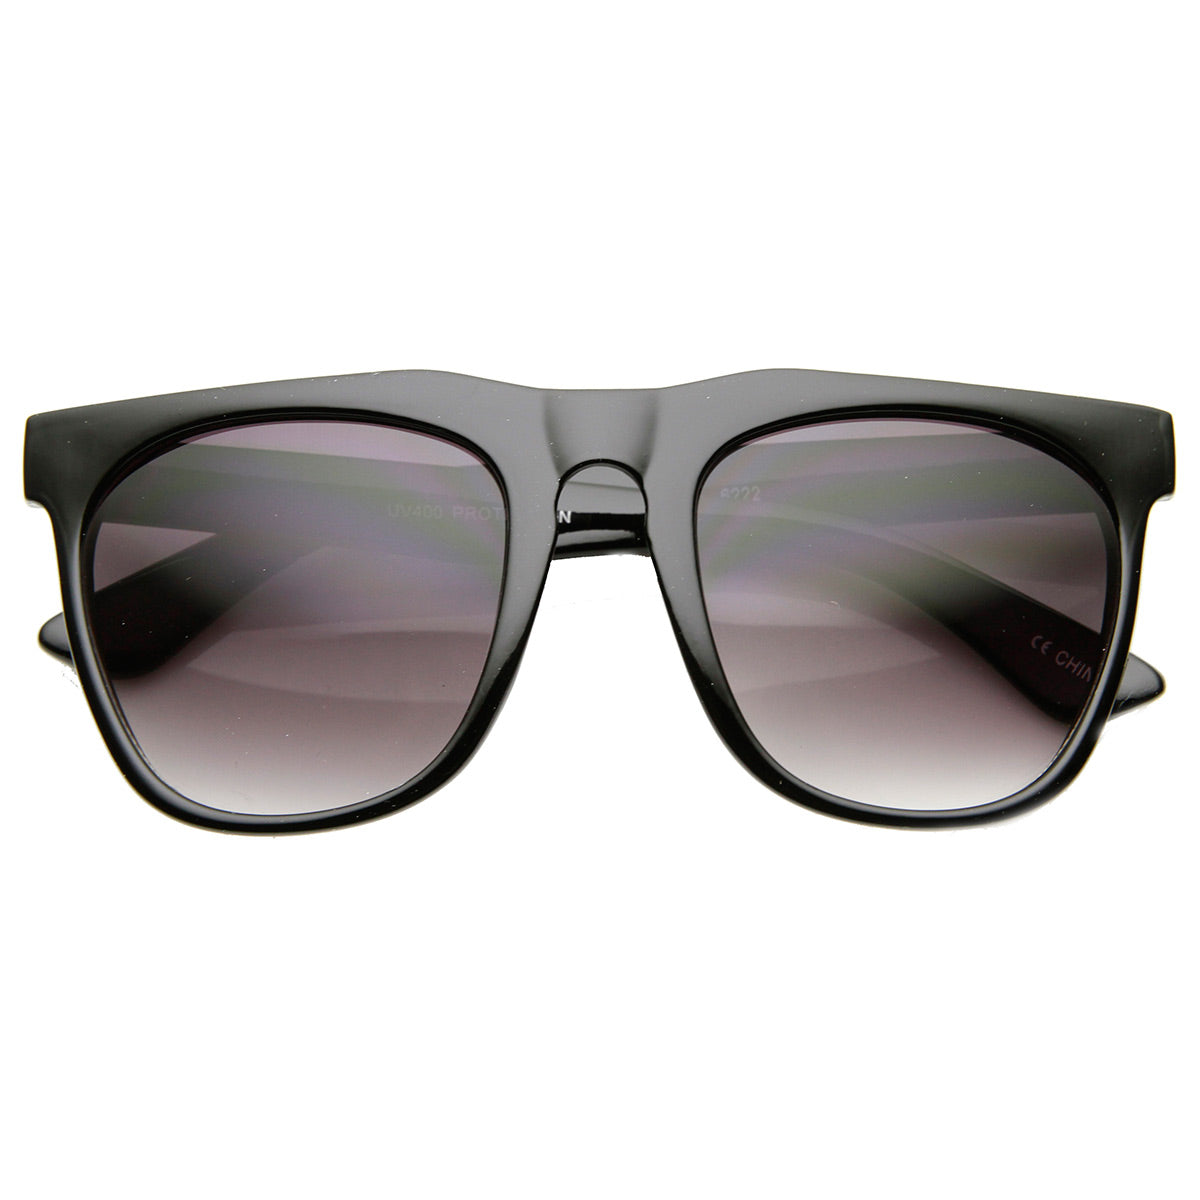 Vintage Oversize Round Glasses – Weekend Shade Sunglasses